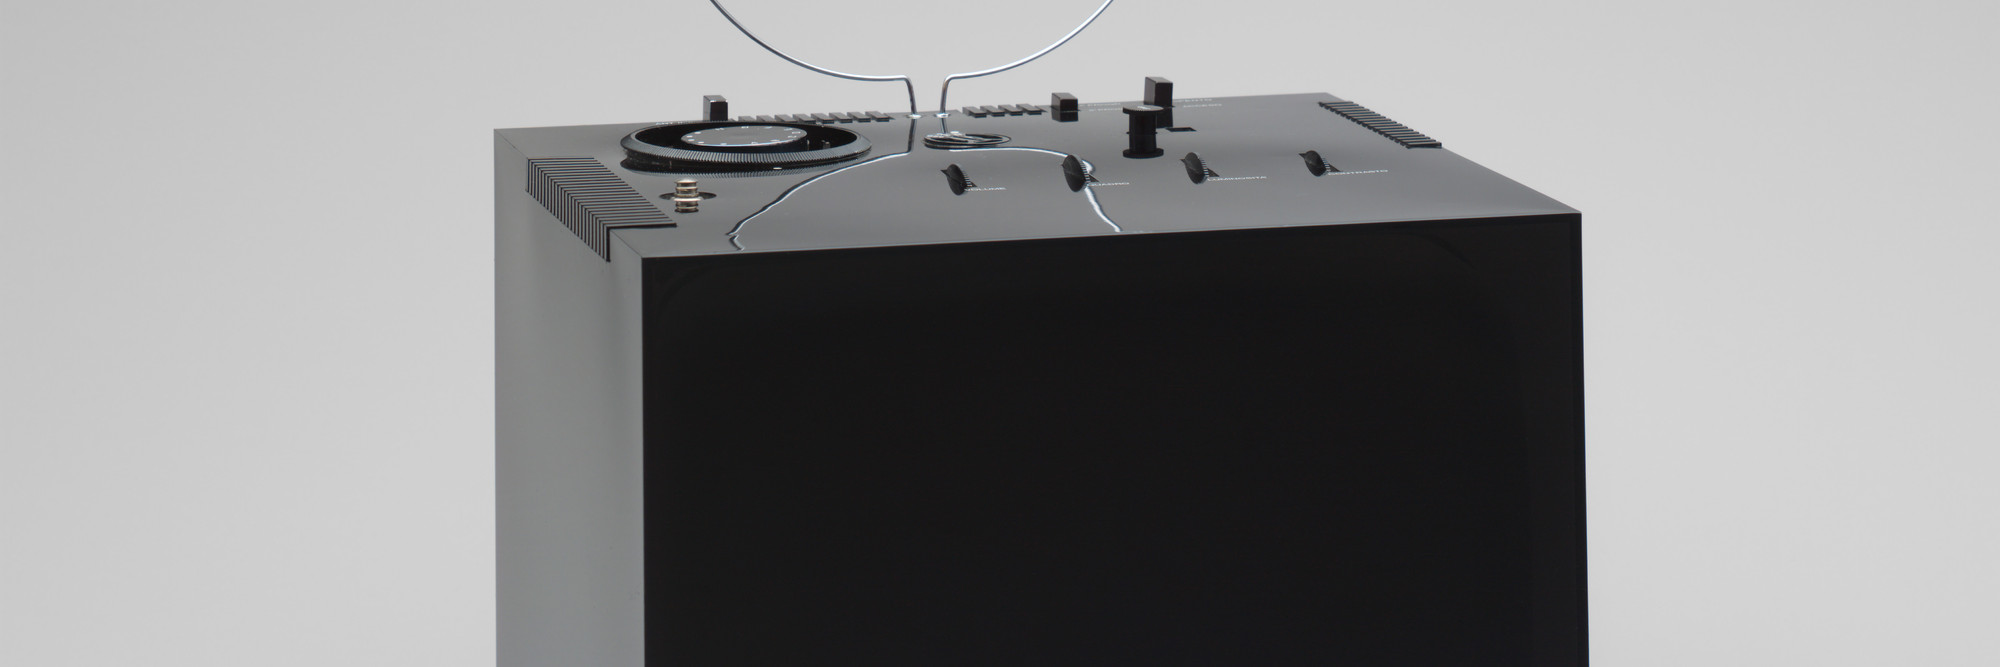 Marco Zanuso, Richard Sapper. Black 201 Television Set. 1969. Manufacturer: Brionvega S.p.A., Italy. Acrylic plastic, 10 × 11 1/2 × 12″ (25.4 × 29.2 × 30.5 cm). Gift of the manufacturer. © 2016 Richard Sapper and Marco Zanuso